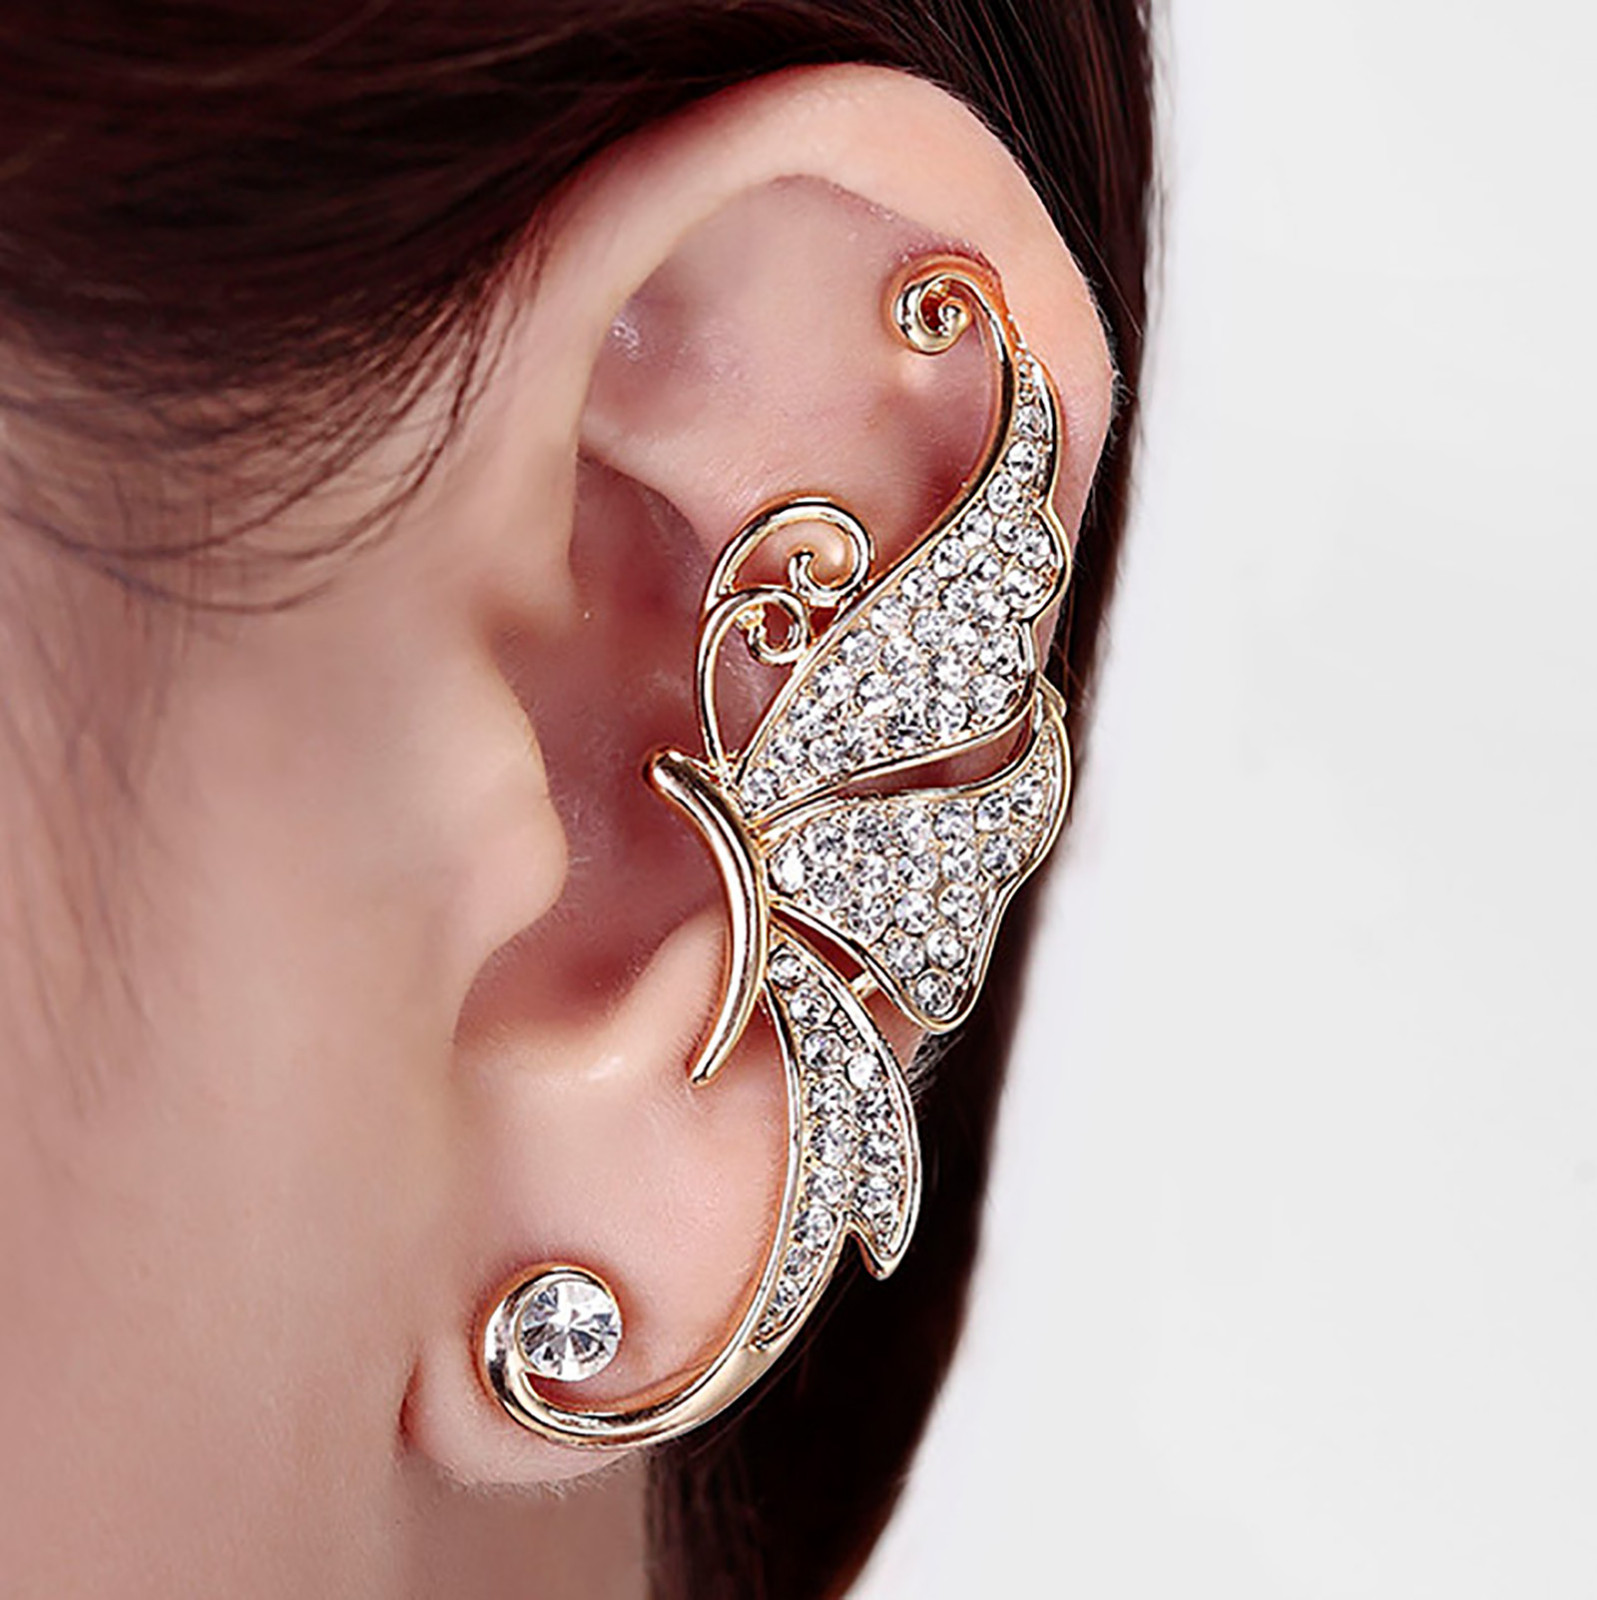 Kayannuo Earrings for Women Christmas Clearance Diamond Butterfly Earrings Earrings Earrings Ear Clips Earrings Earrings Women Gifts for Women - image 1 of 3